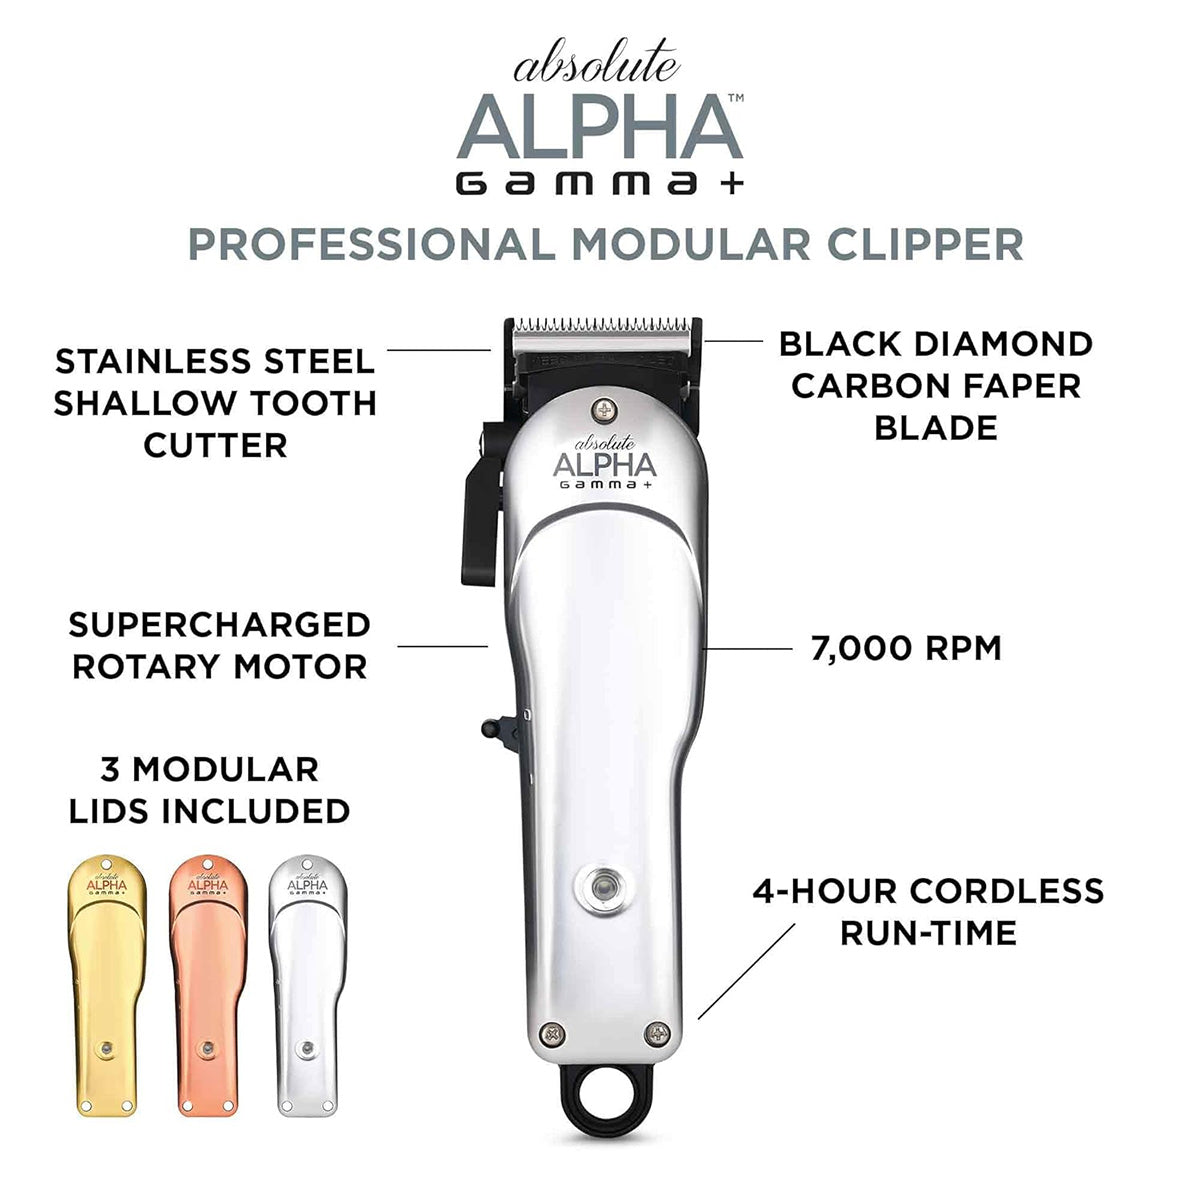 GAMMA+ Absolute Alpha Professional Modular USB Cordless Clipper